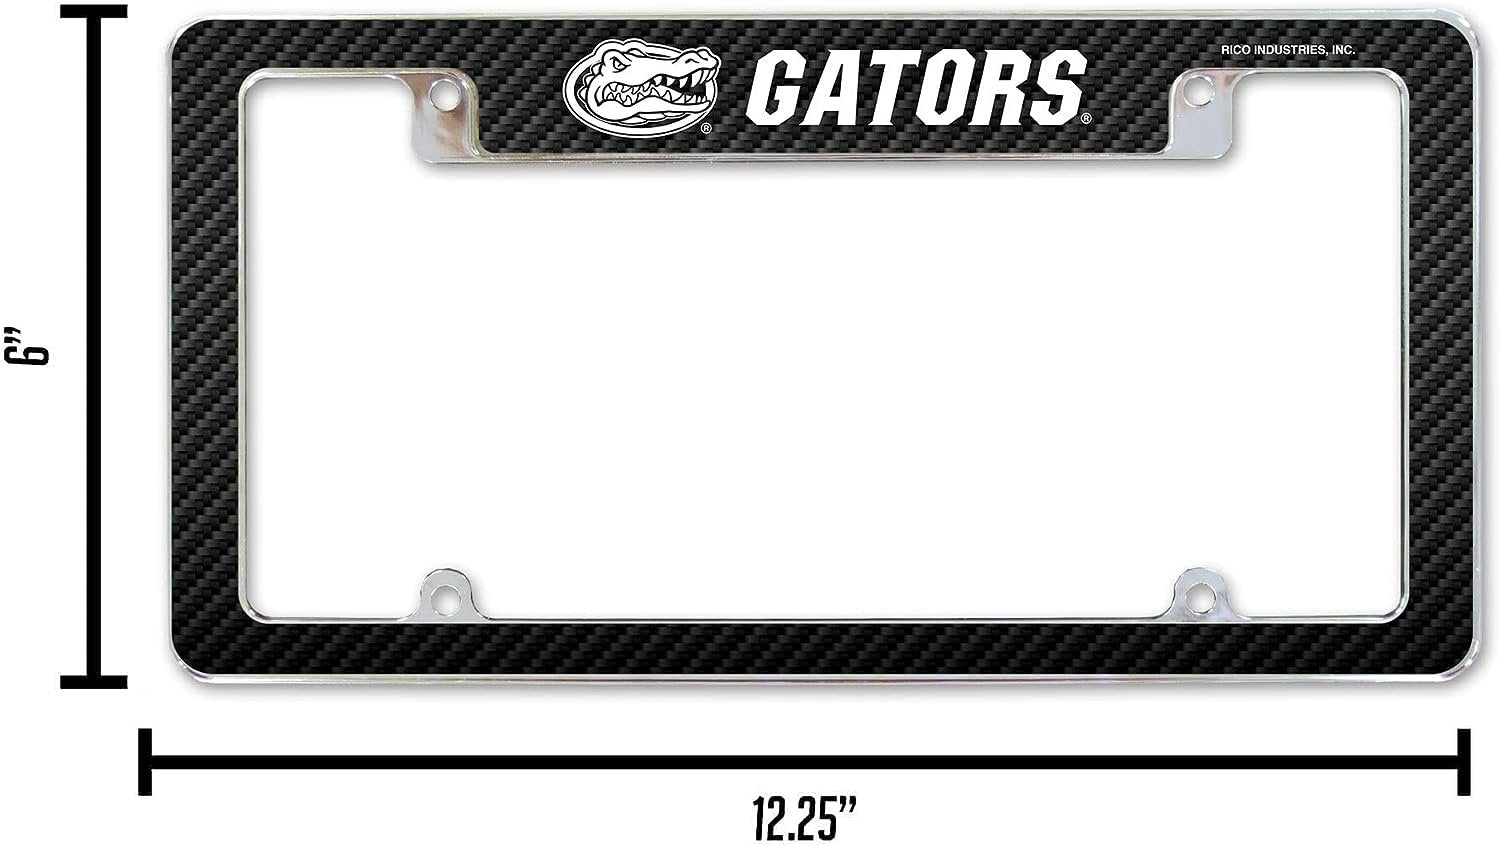 University of Florida Gators Metal License Plate Frame Chrome Tag Cover 12x6 Inch Carbon Fiber Design